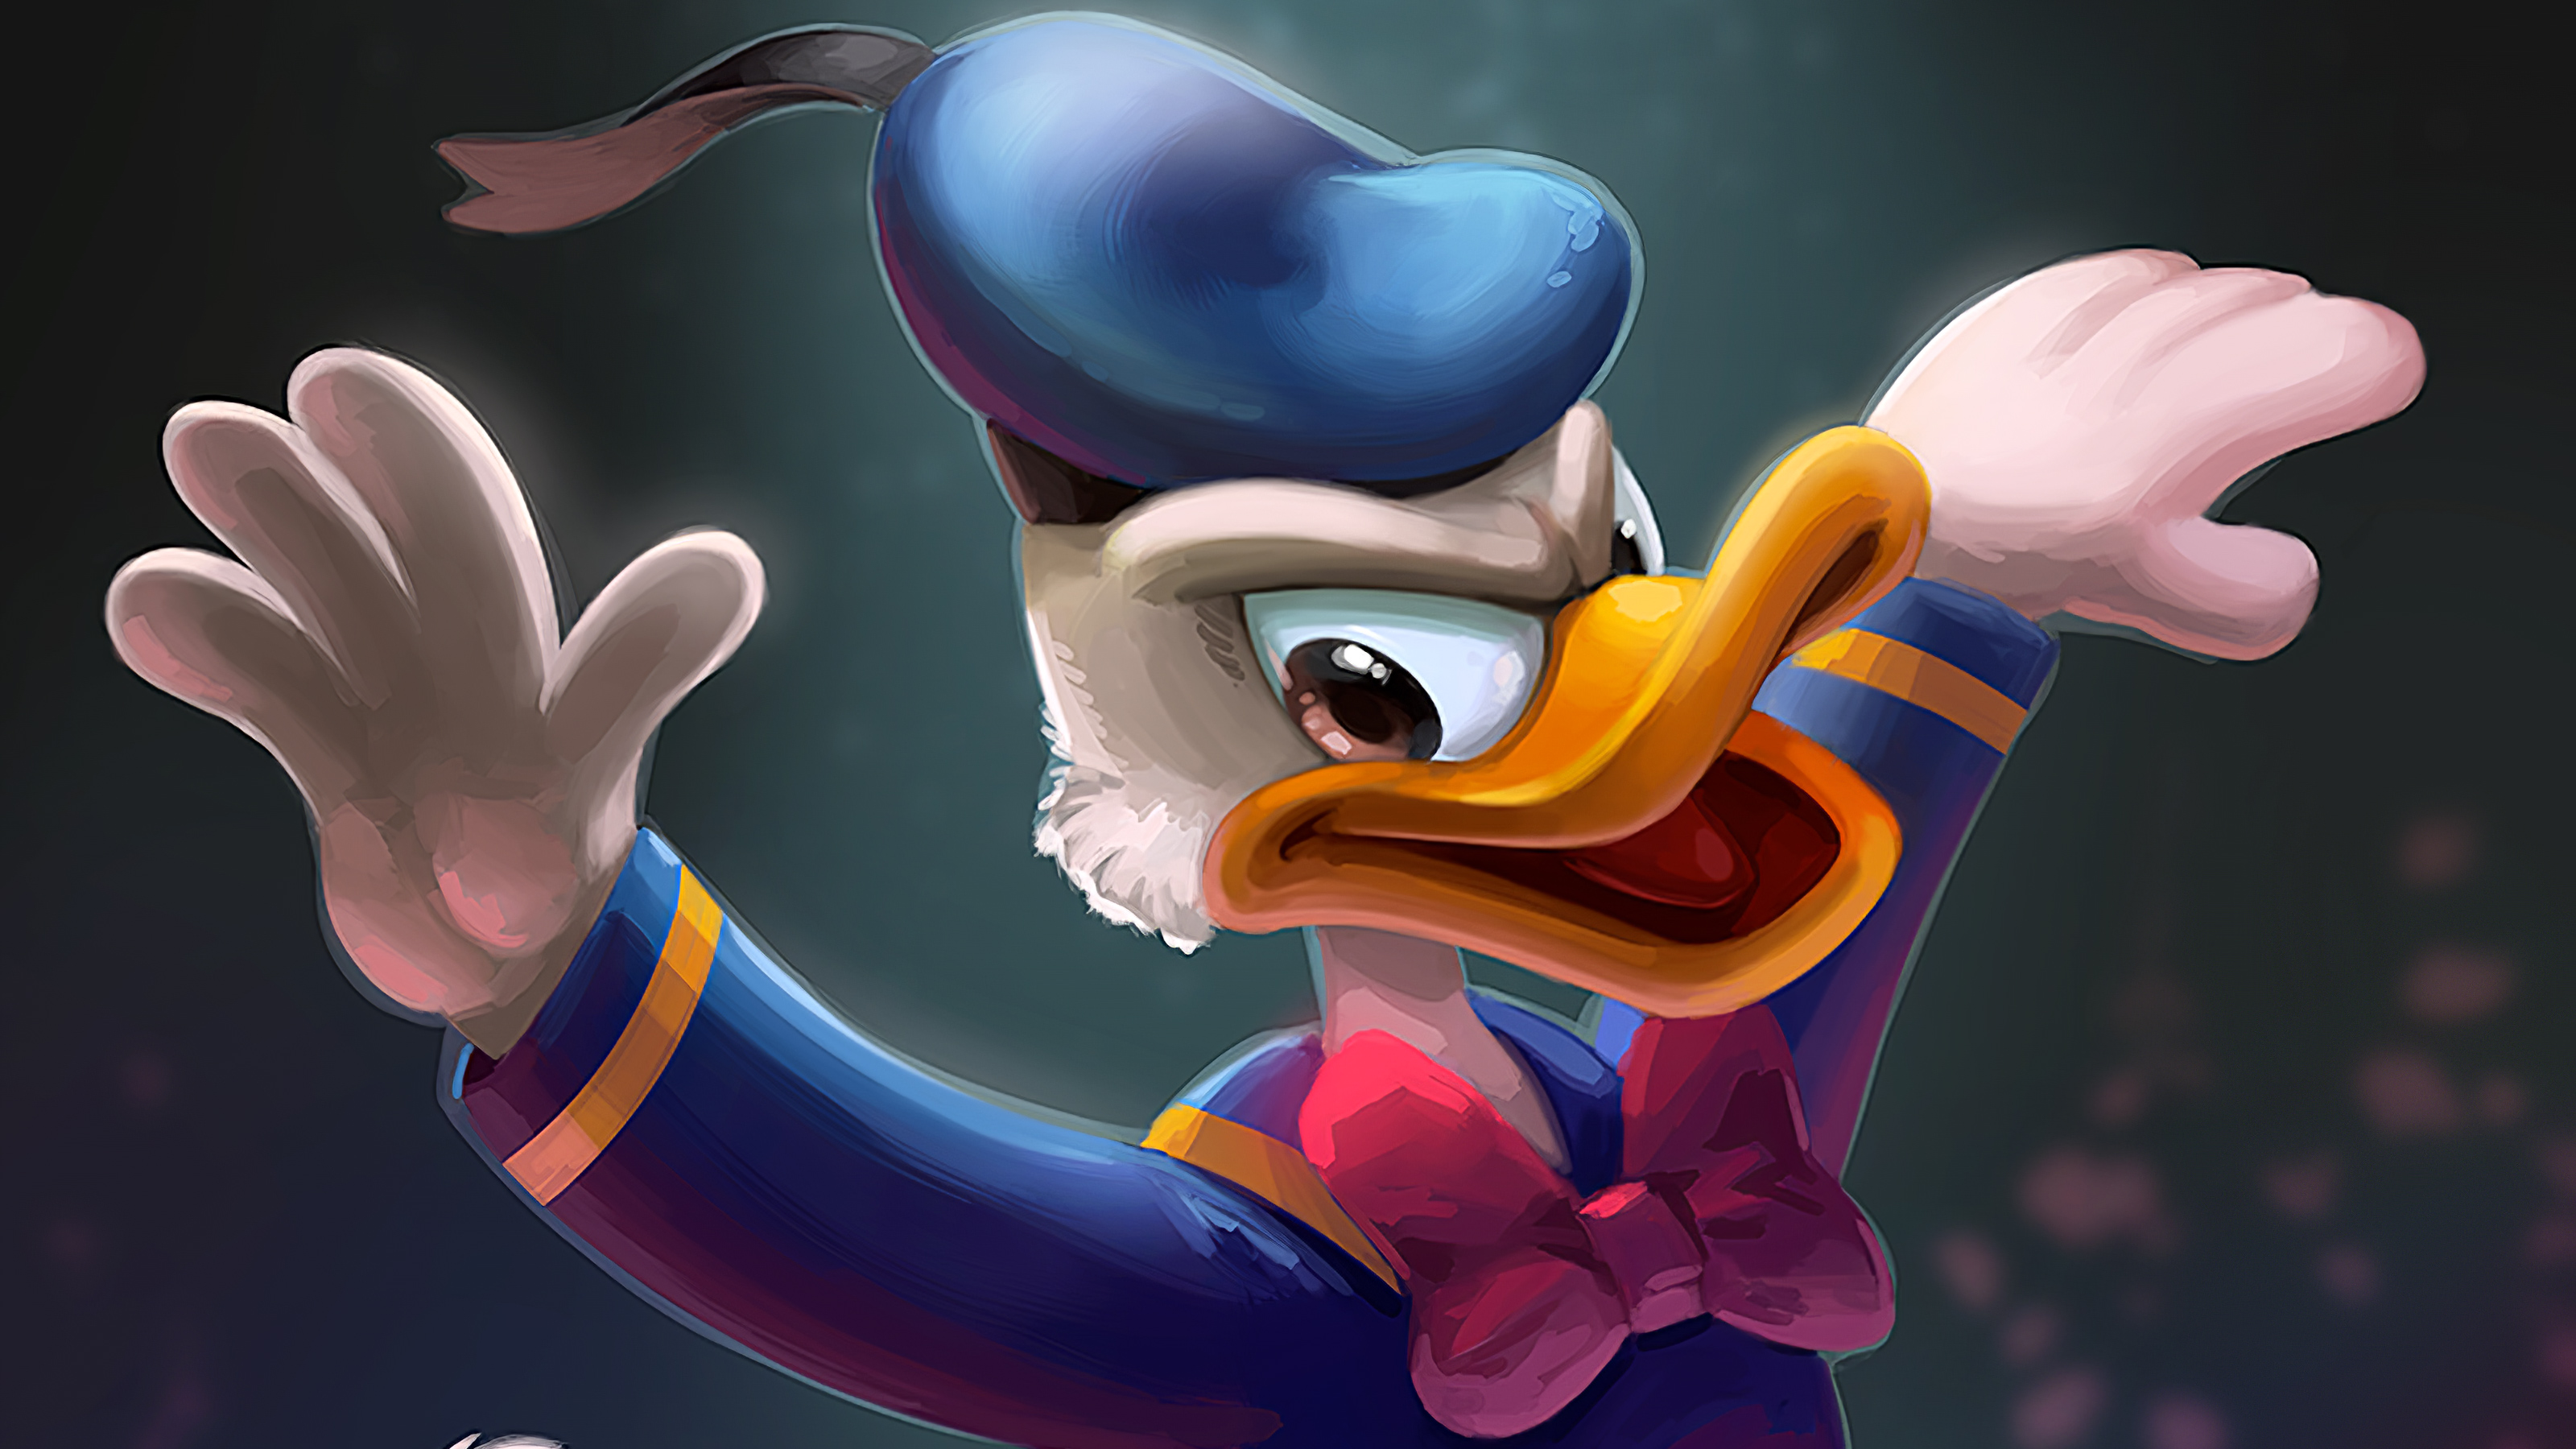 Donald Duck 4k, HD Cartoons, 4k Wallpapers, Images ...